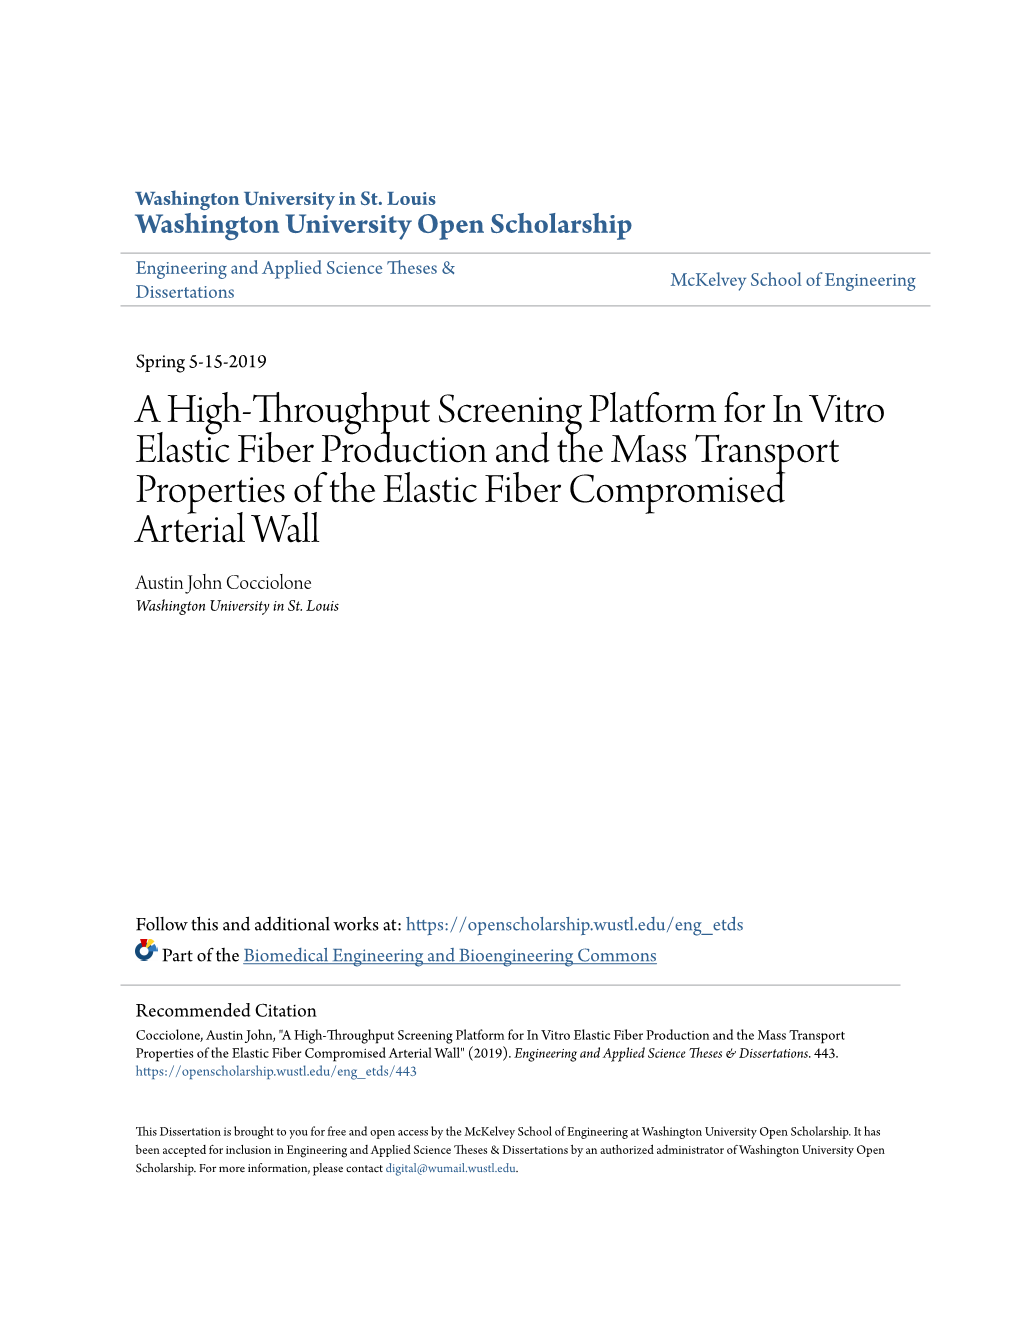 A High-Throughput Screening Platform for in Vitro Elastic Fiber